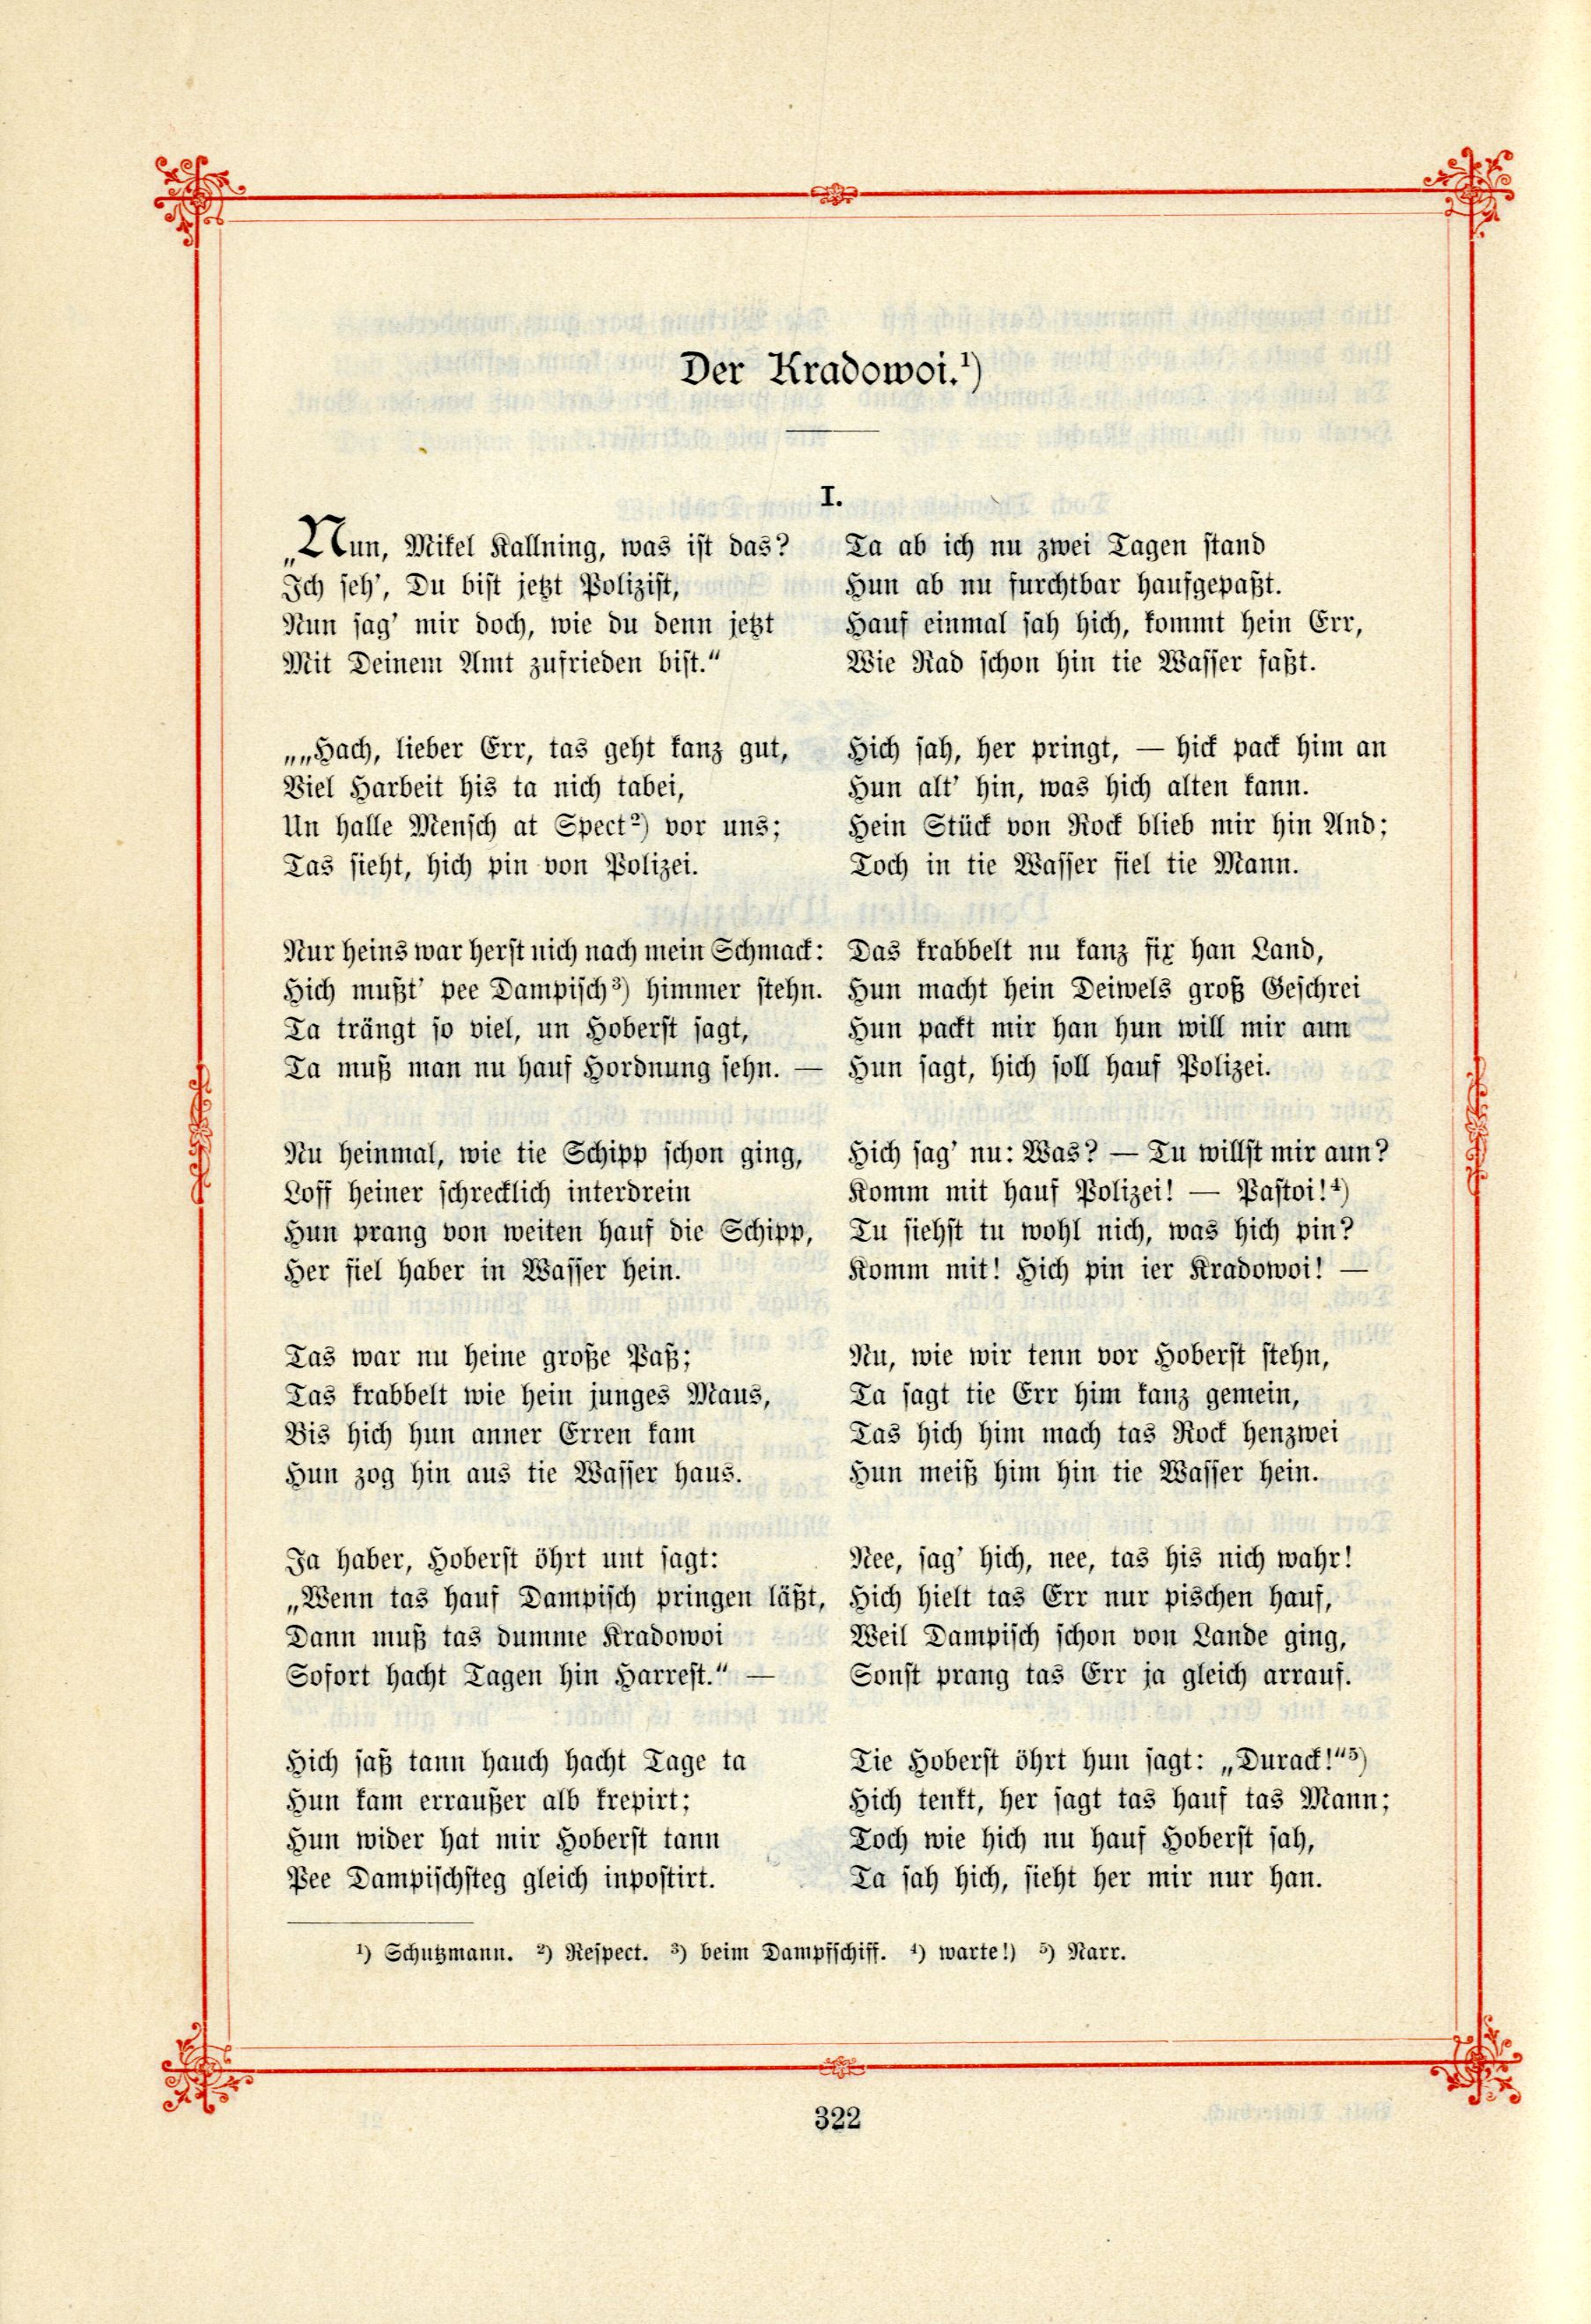 Der Kradowoi (1895) | 1. (322) Main body of text